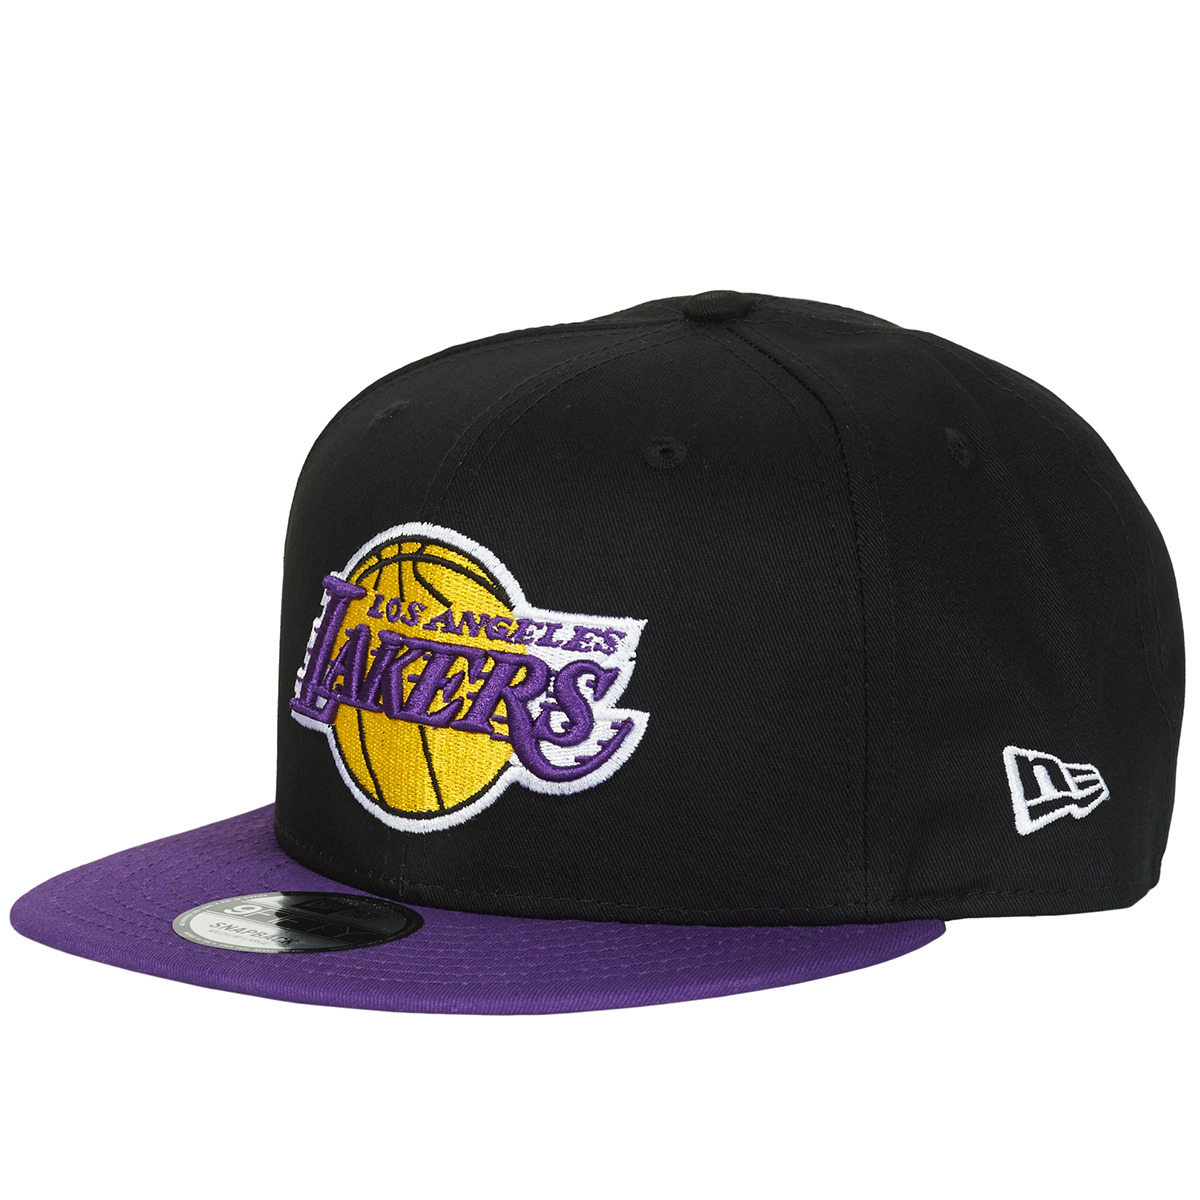 Clothes accessories Caps New-Era NBA 9FIFTY LOS ANGELES LAKERS Black / Purple